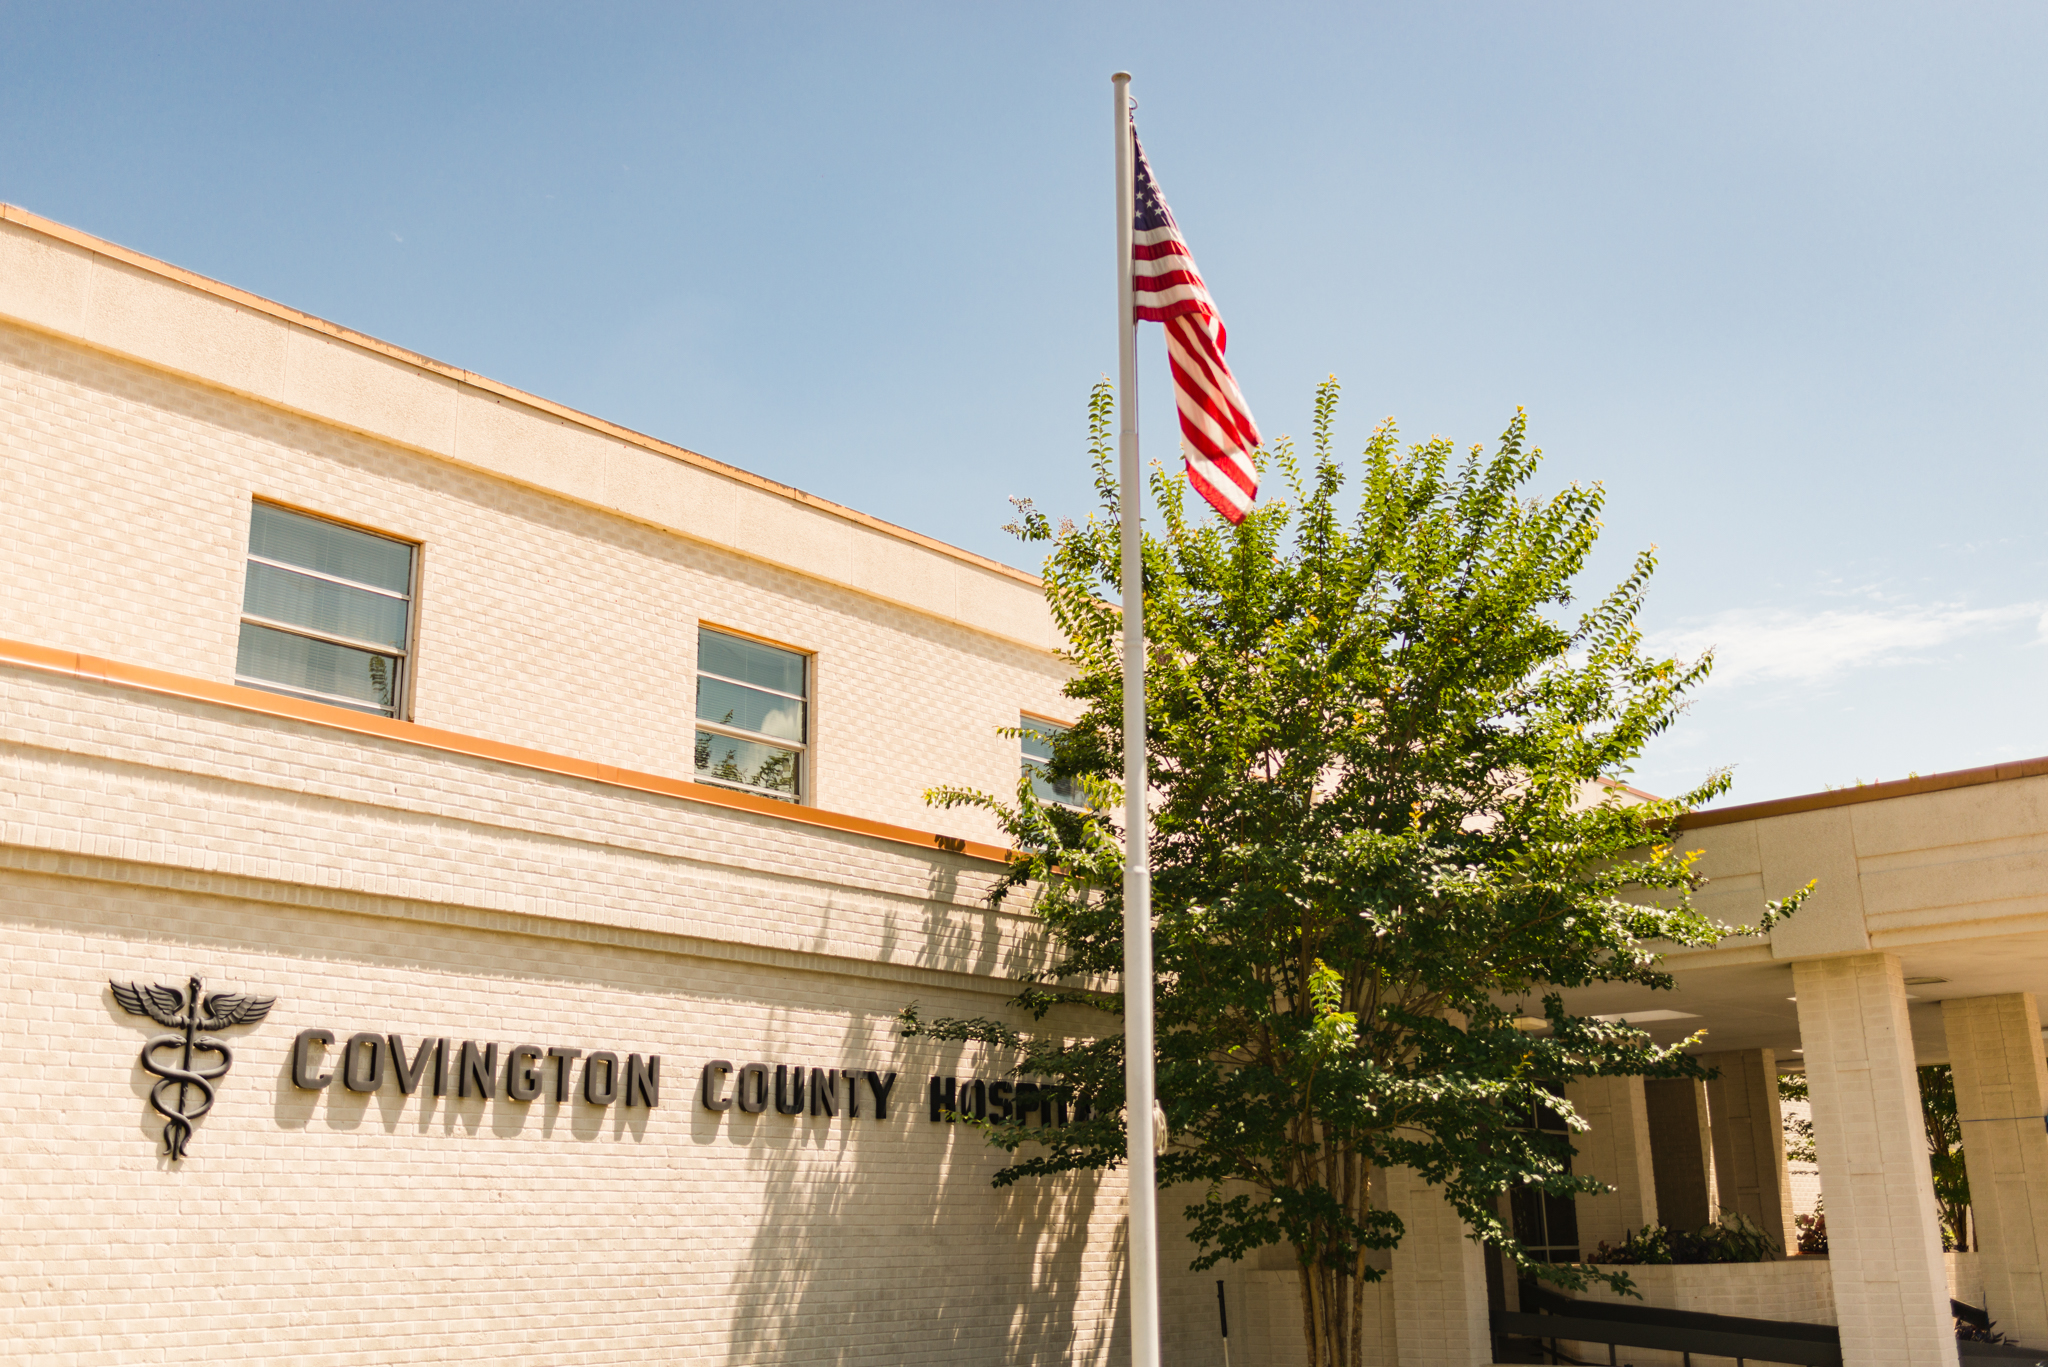 Covington County Hospital